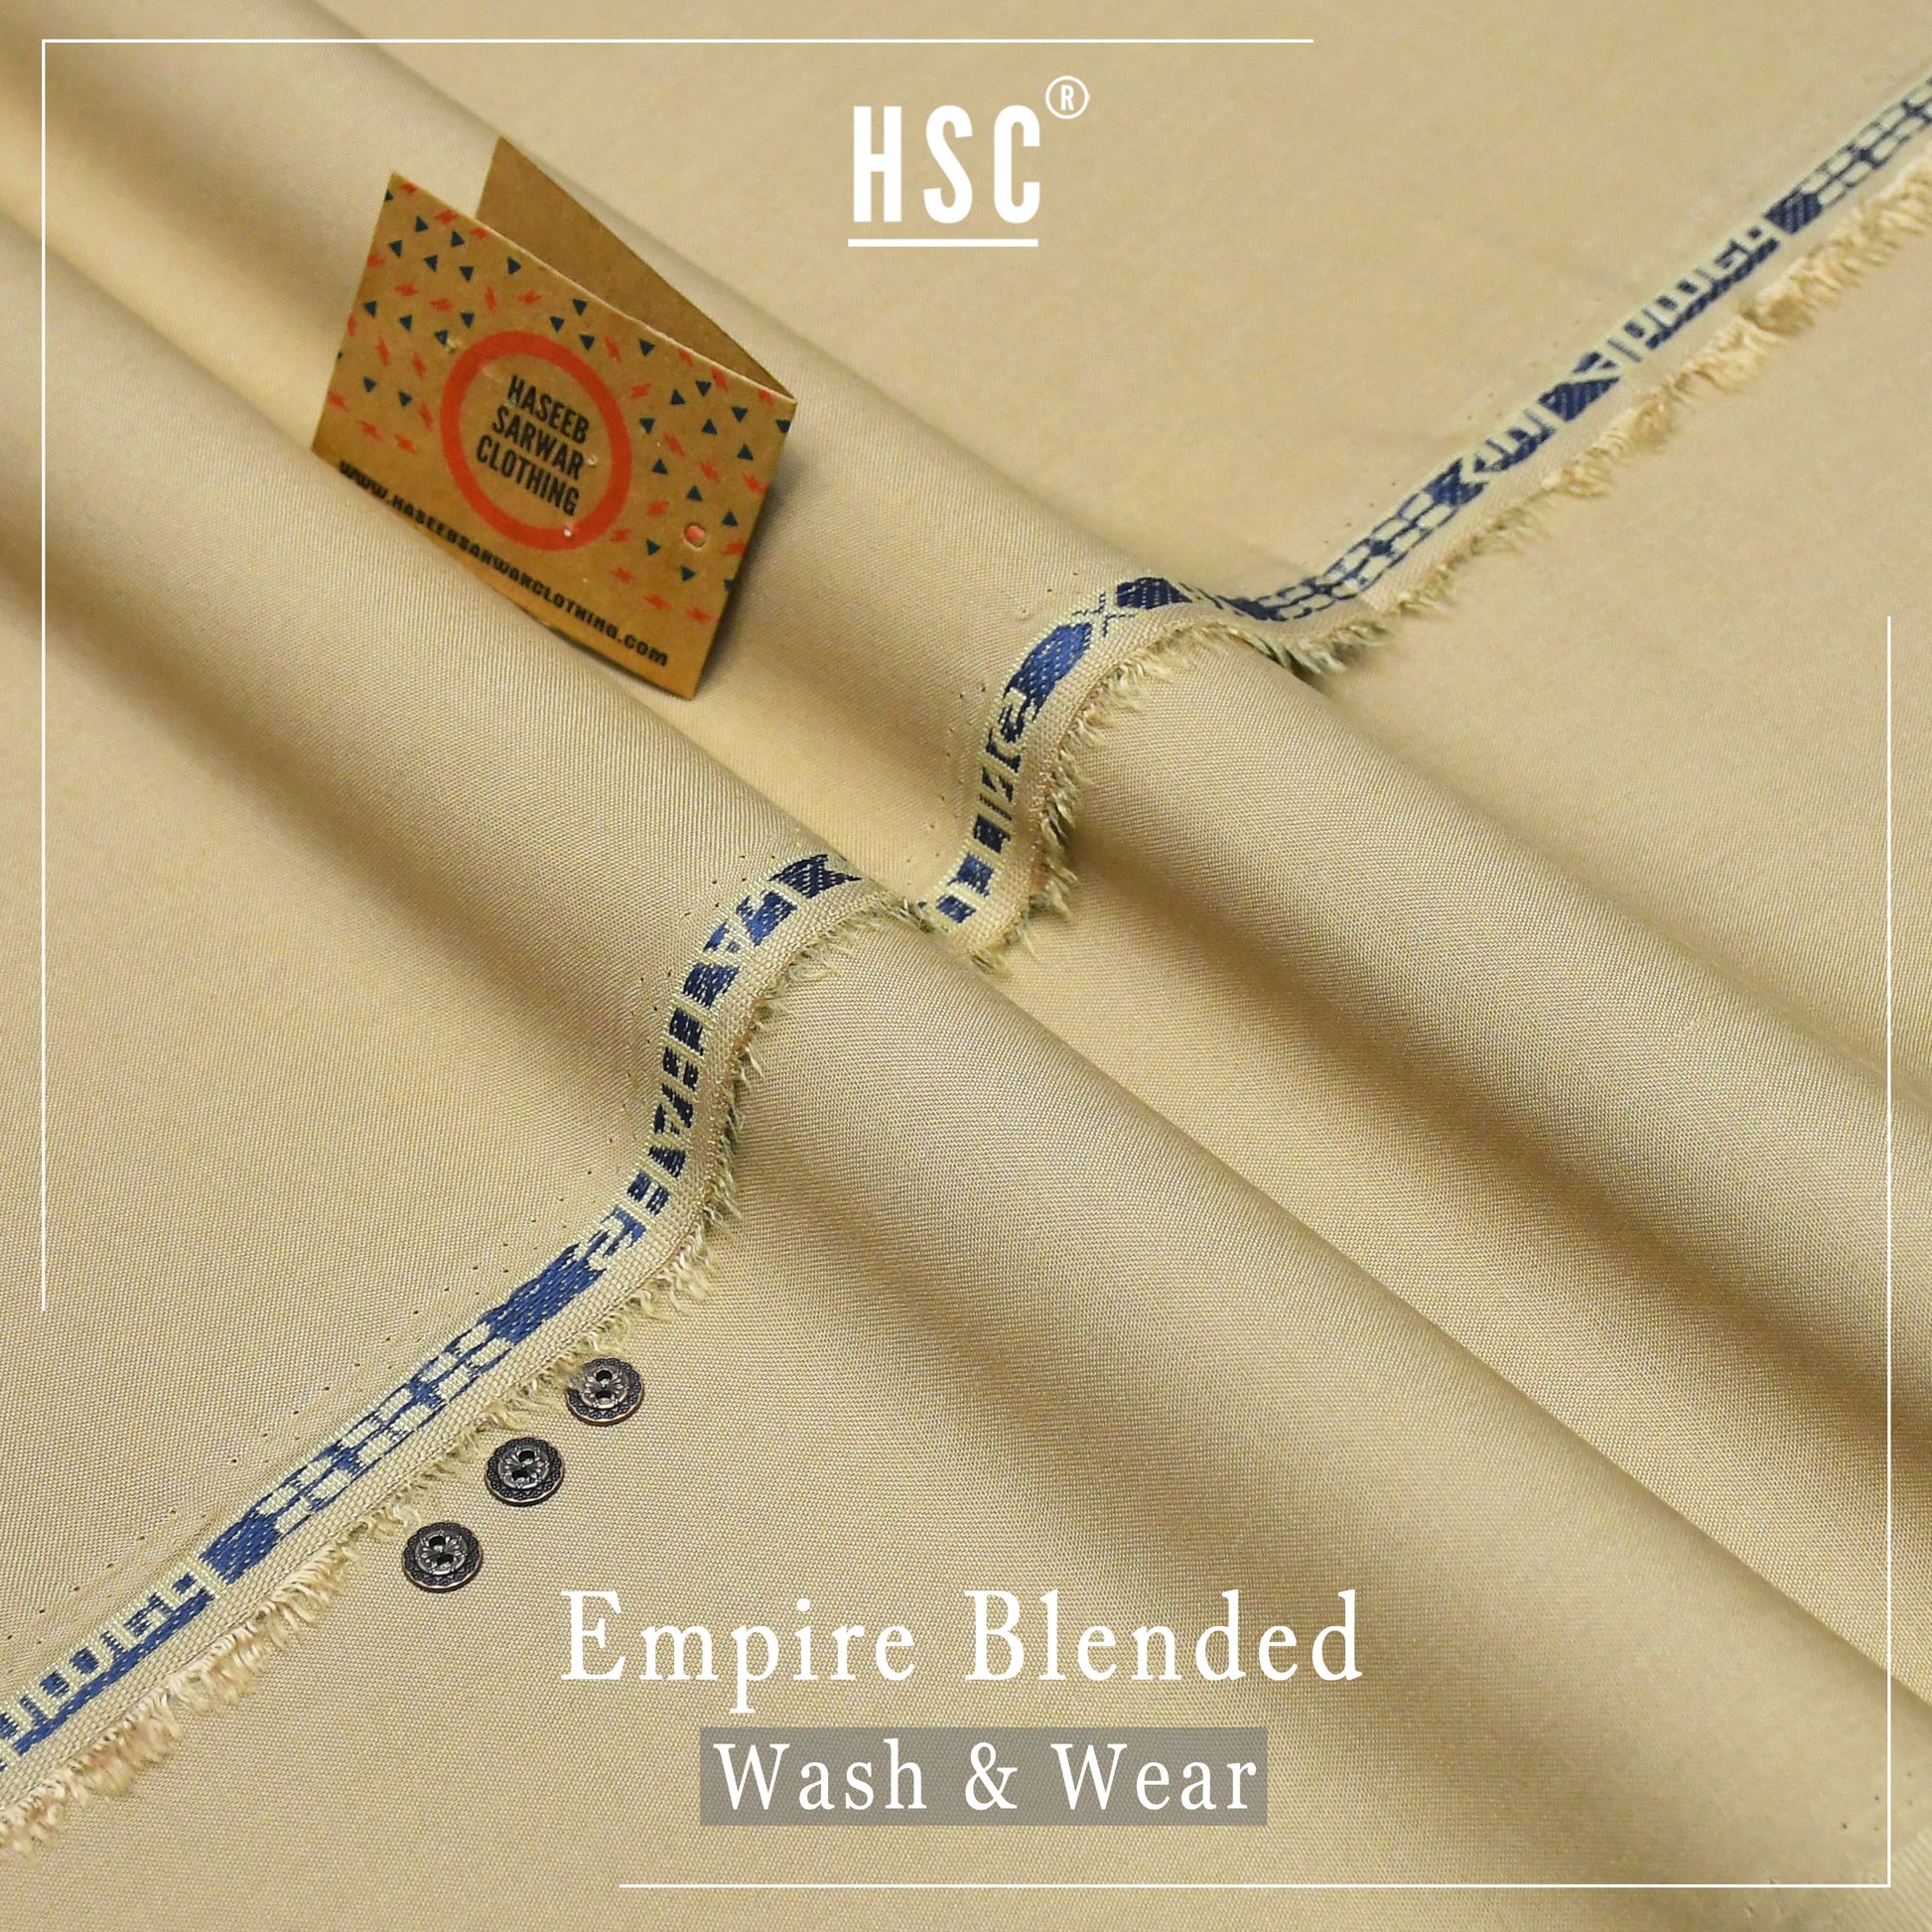 Buy 1 Get 1 Free Empire Blended Wash&Wear - EBW6 HSC